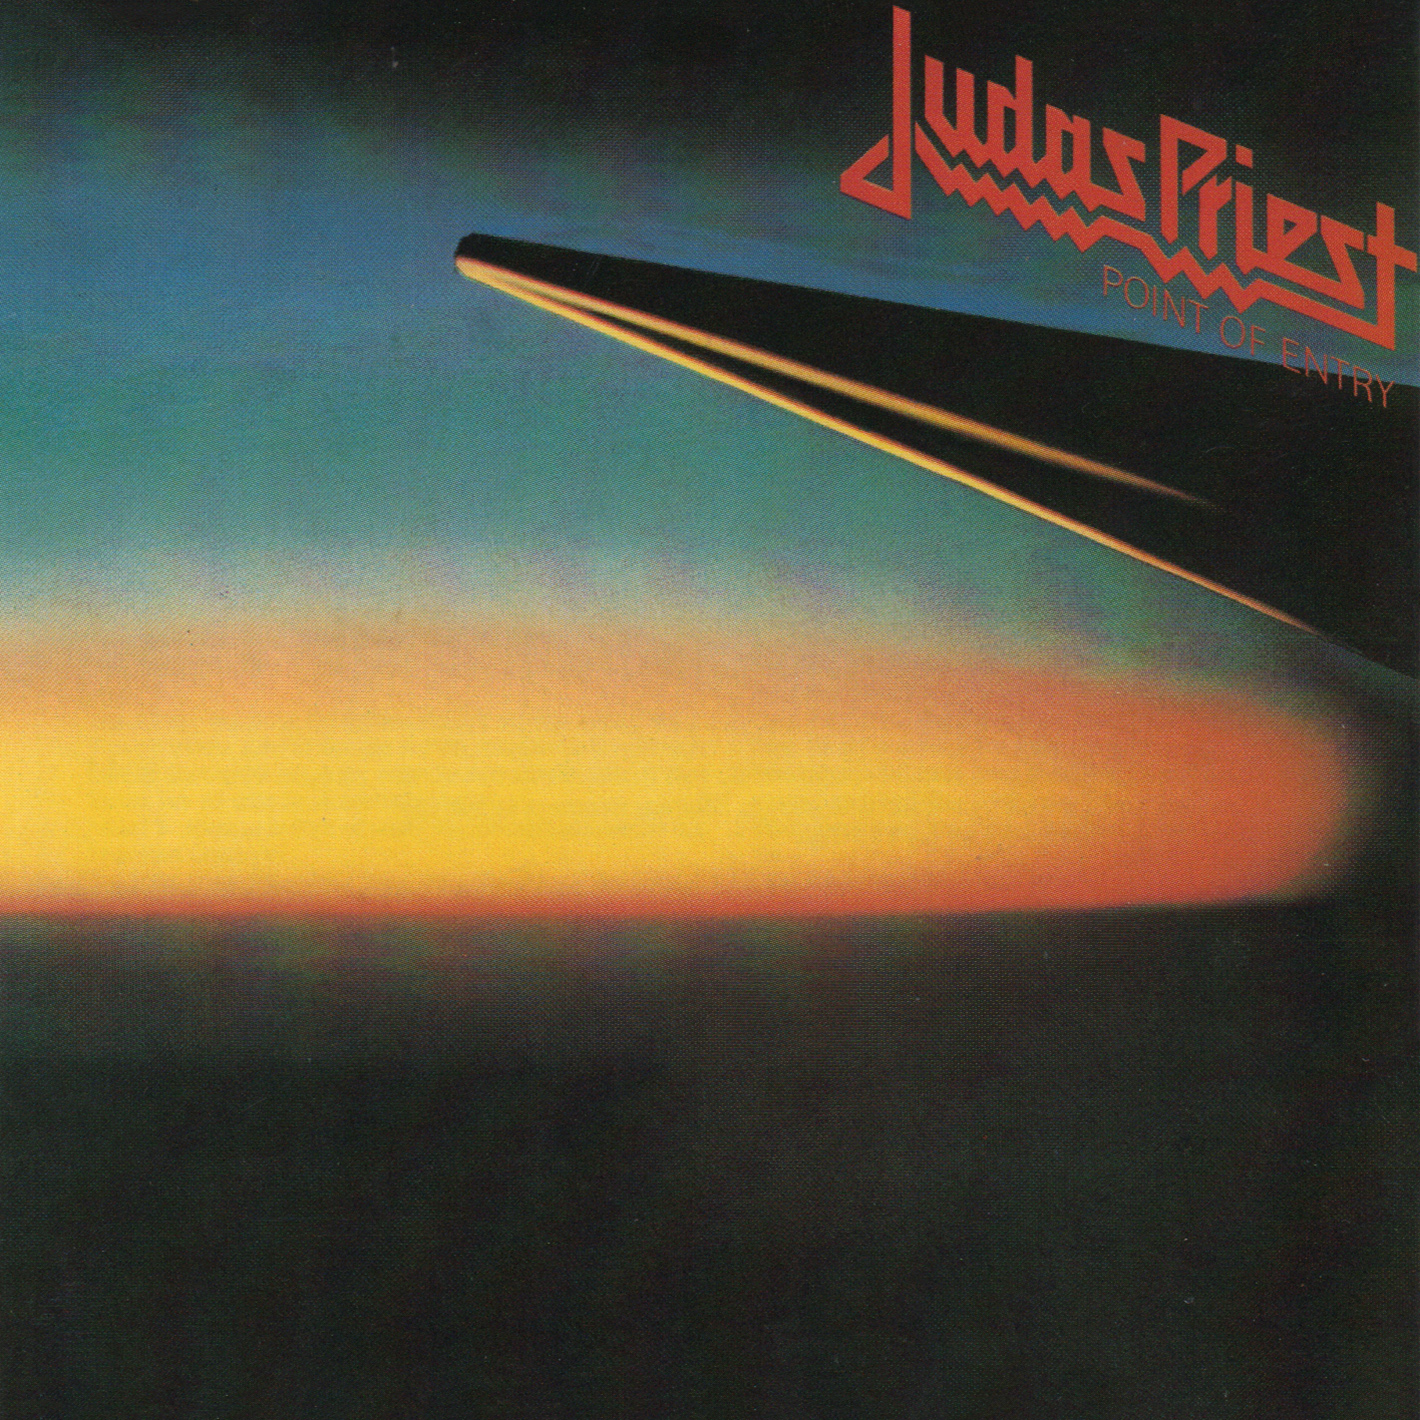 Judas Priest-1981-Point Of Entry [467829 2]